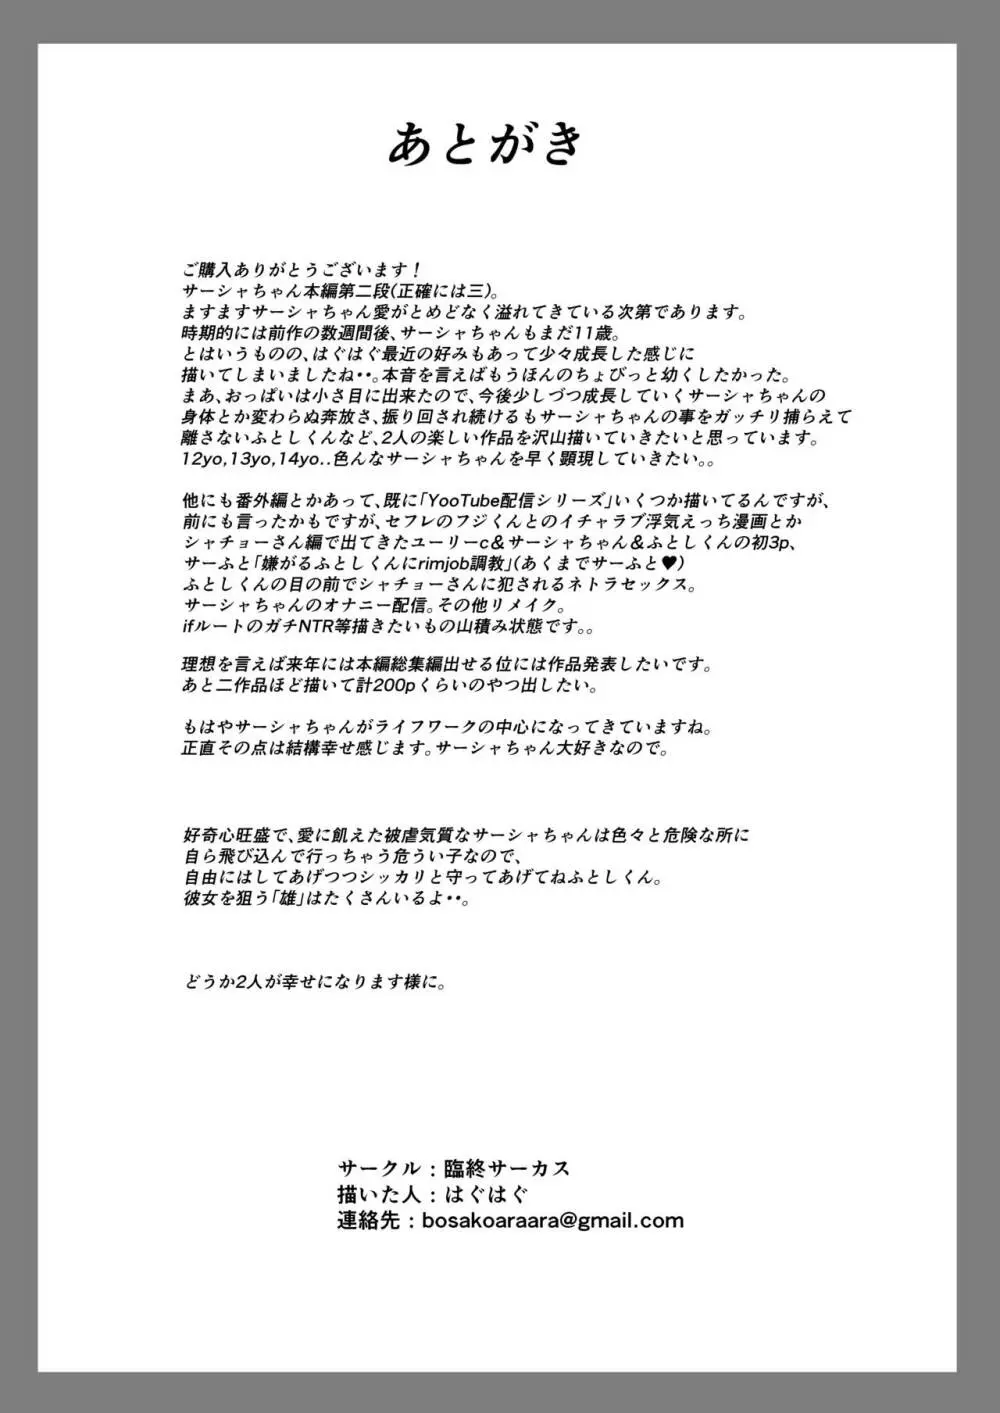 Re:Welcome Sashachan 〜サーシャちゃんがようこそ 2〜 - page62